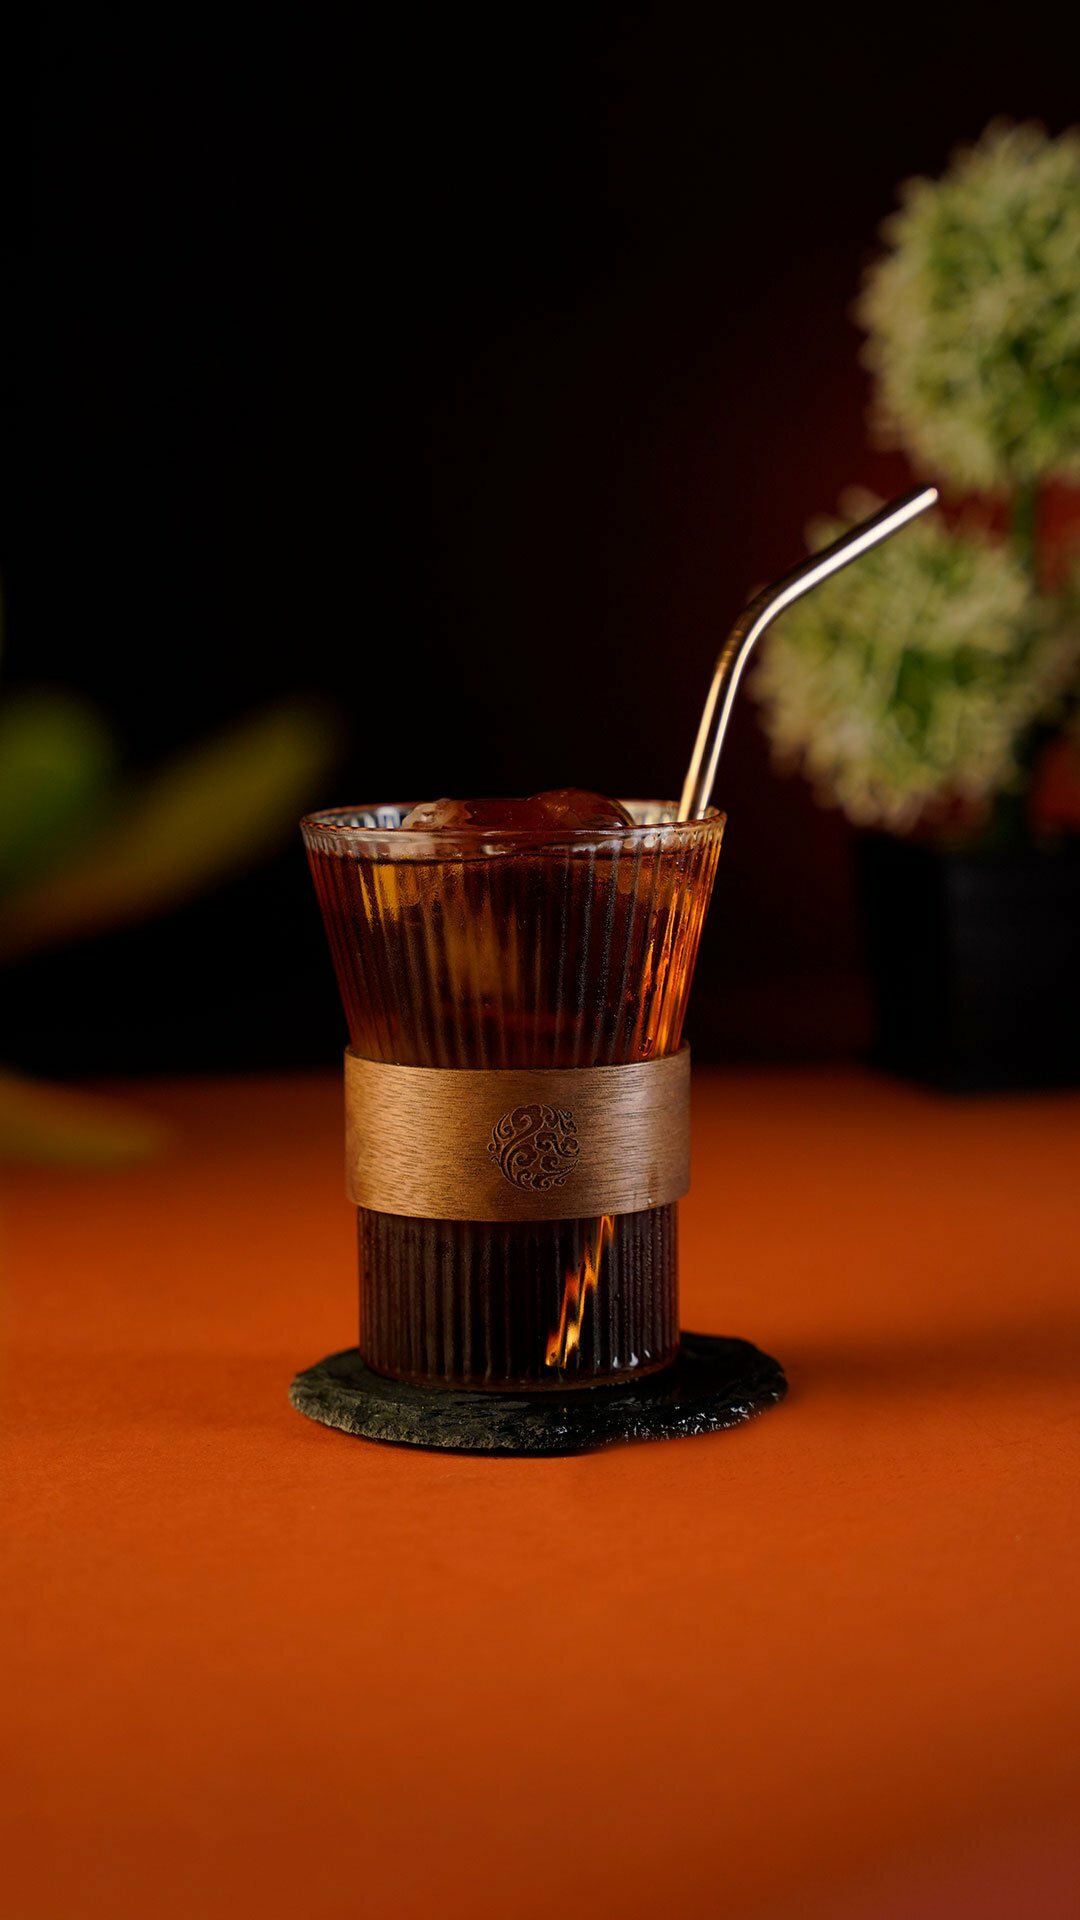 Dark coffee cocktail inside a striped tumbler glass